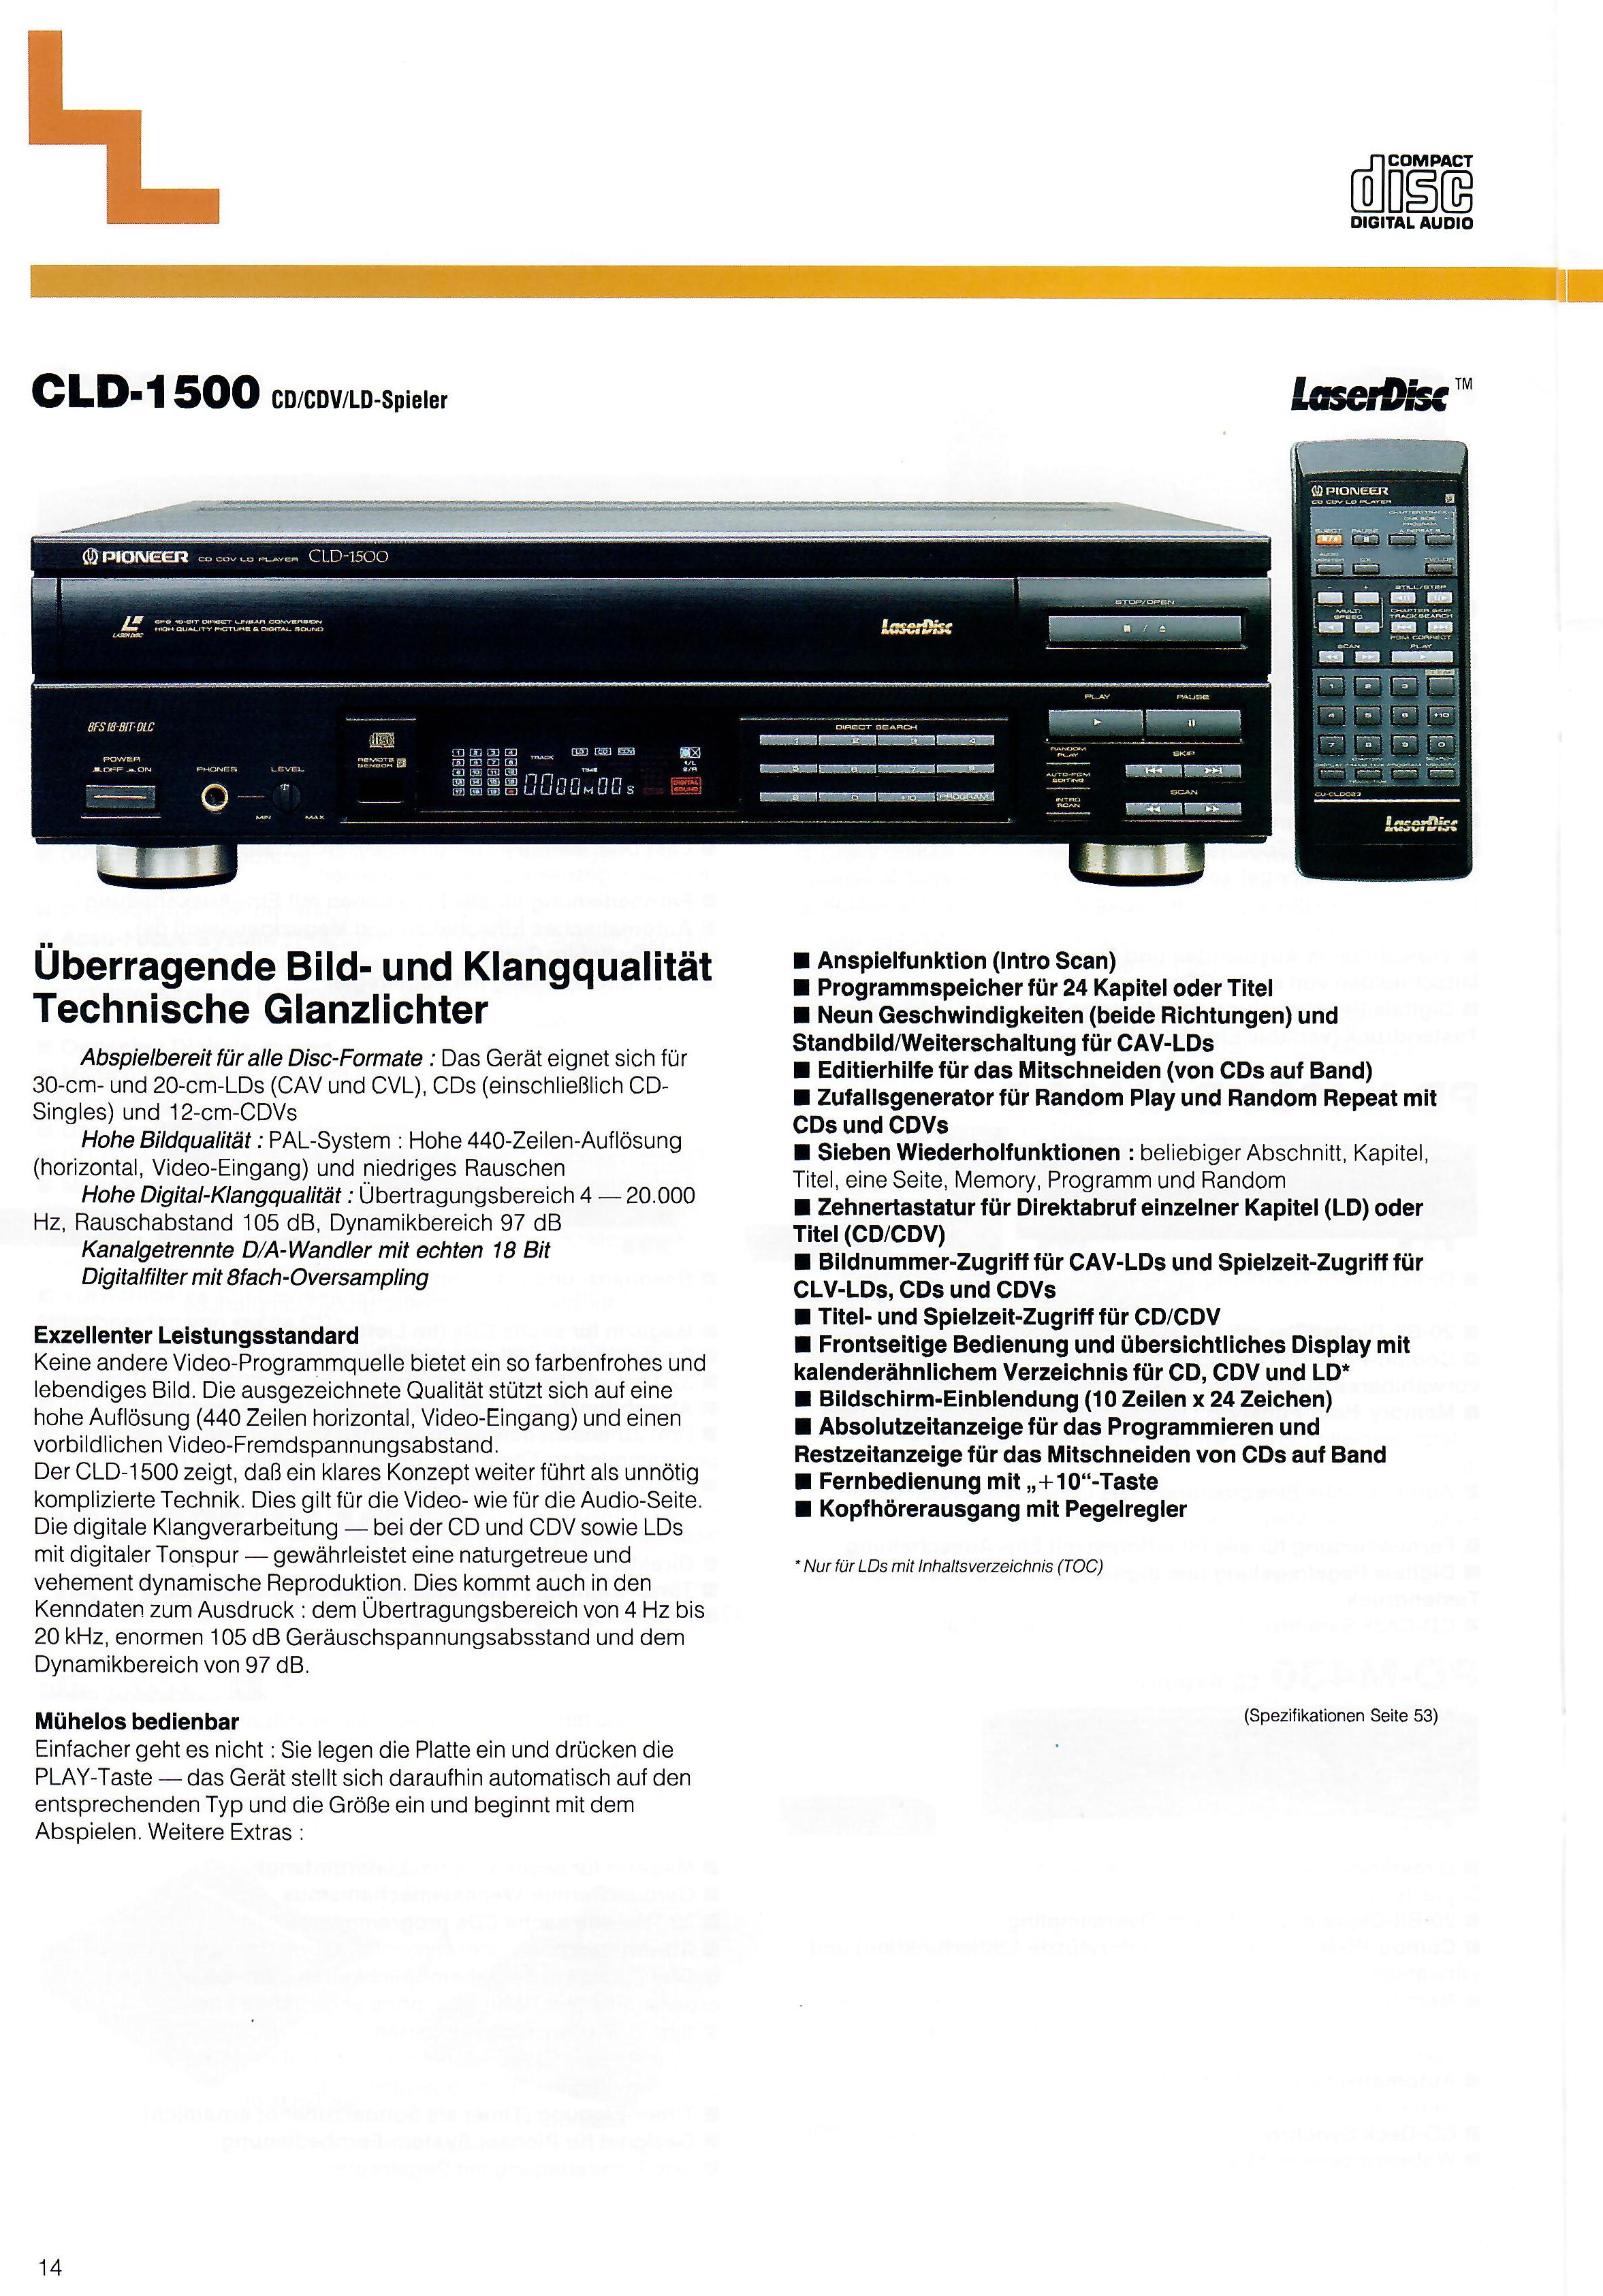 Pioneer CLD-1500-Prospekt-1.jpg